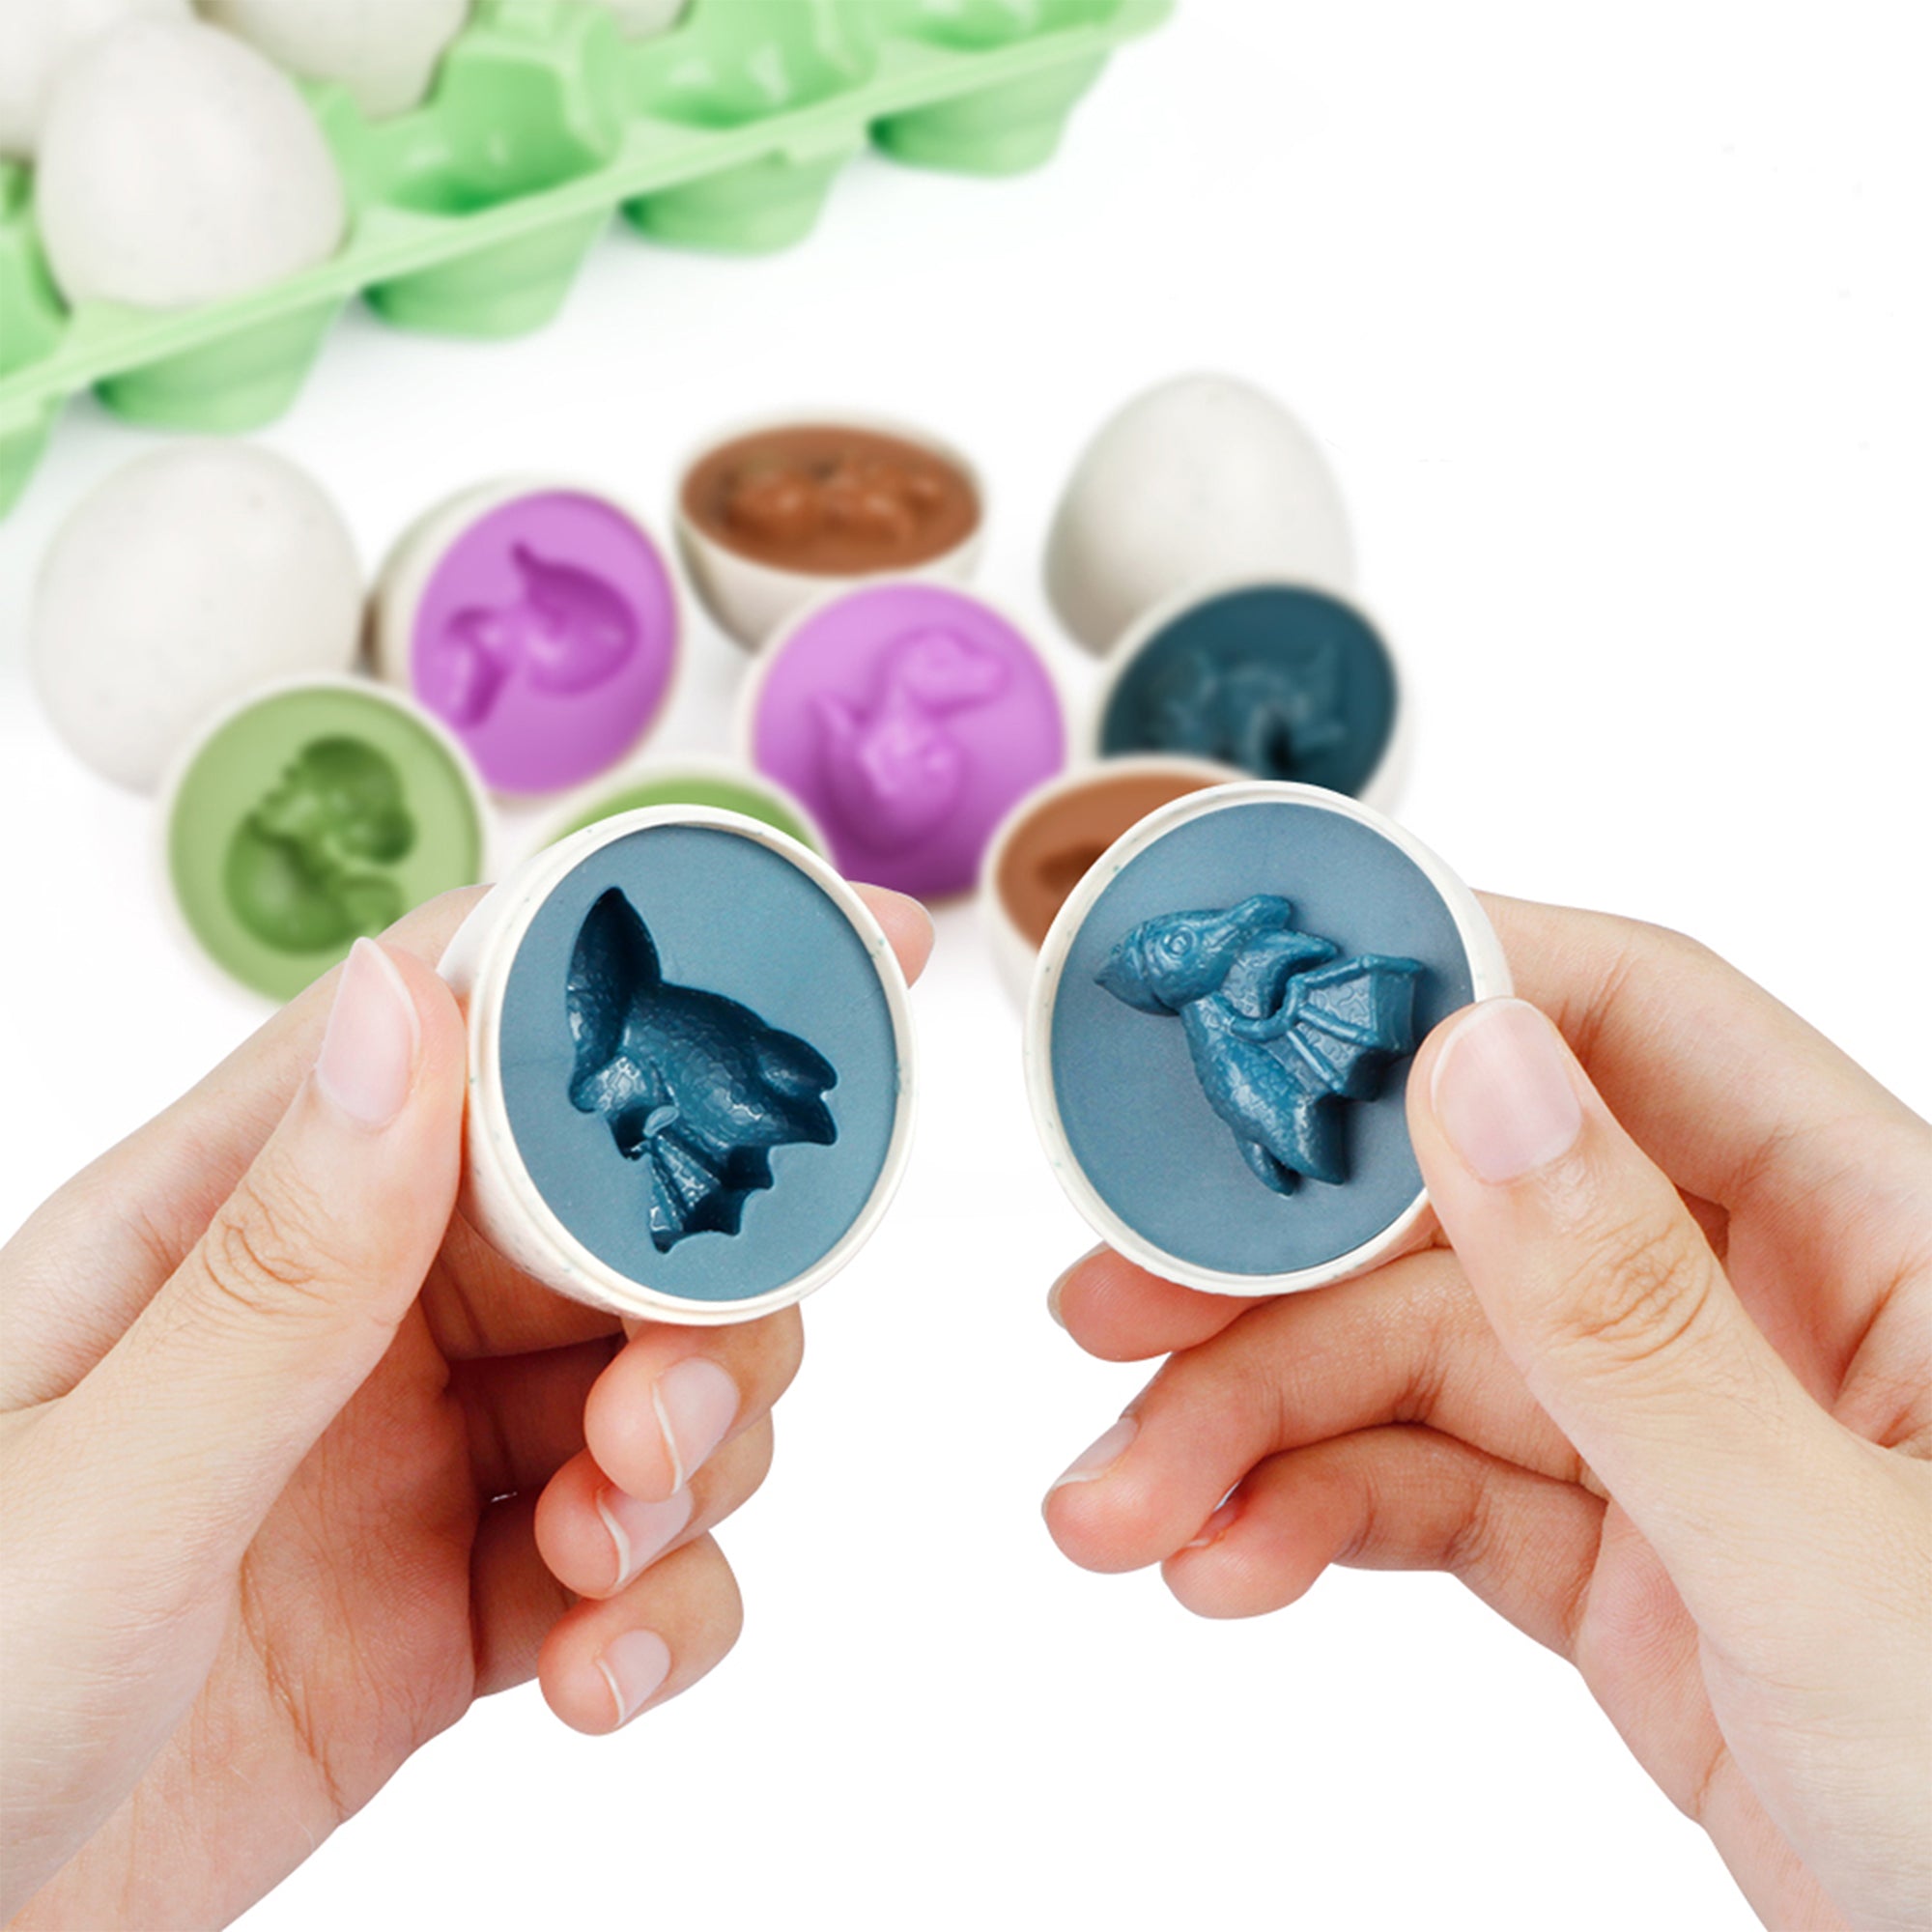 Zunammy Dinasour Egg Carton STEM Teaches Colors and Shapes, Sorting